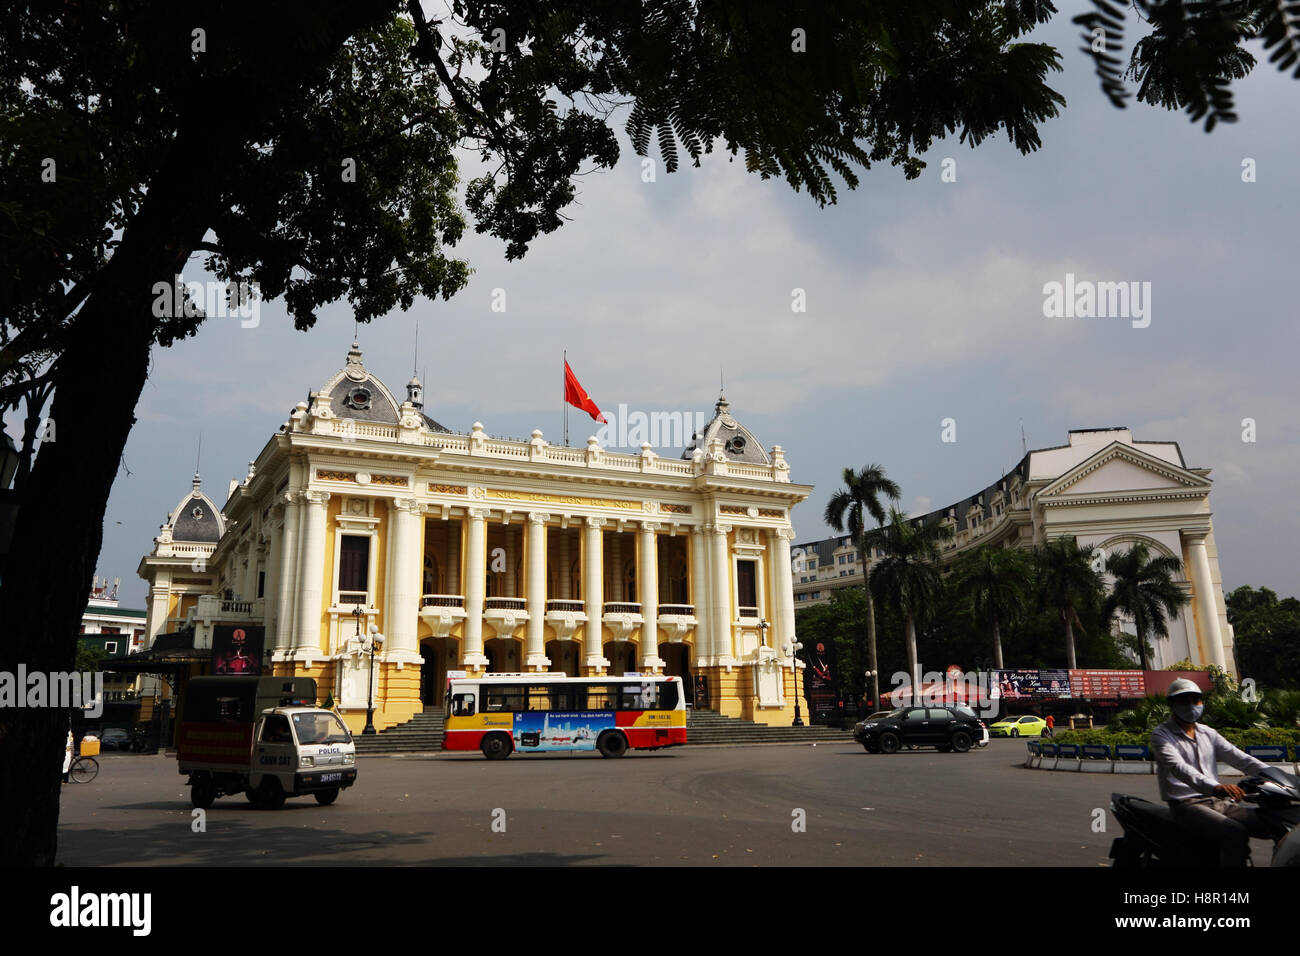 Nha Hat Lon Ha Noi is the opera house in central Hanoi, Vietnam. Stock Photo